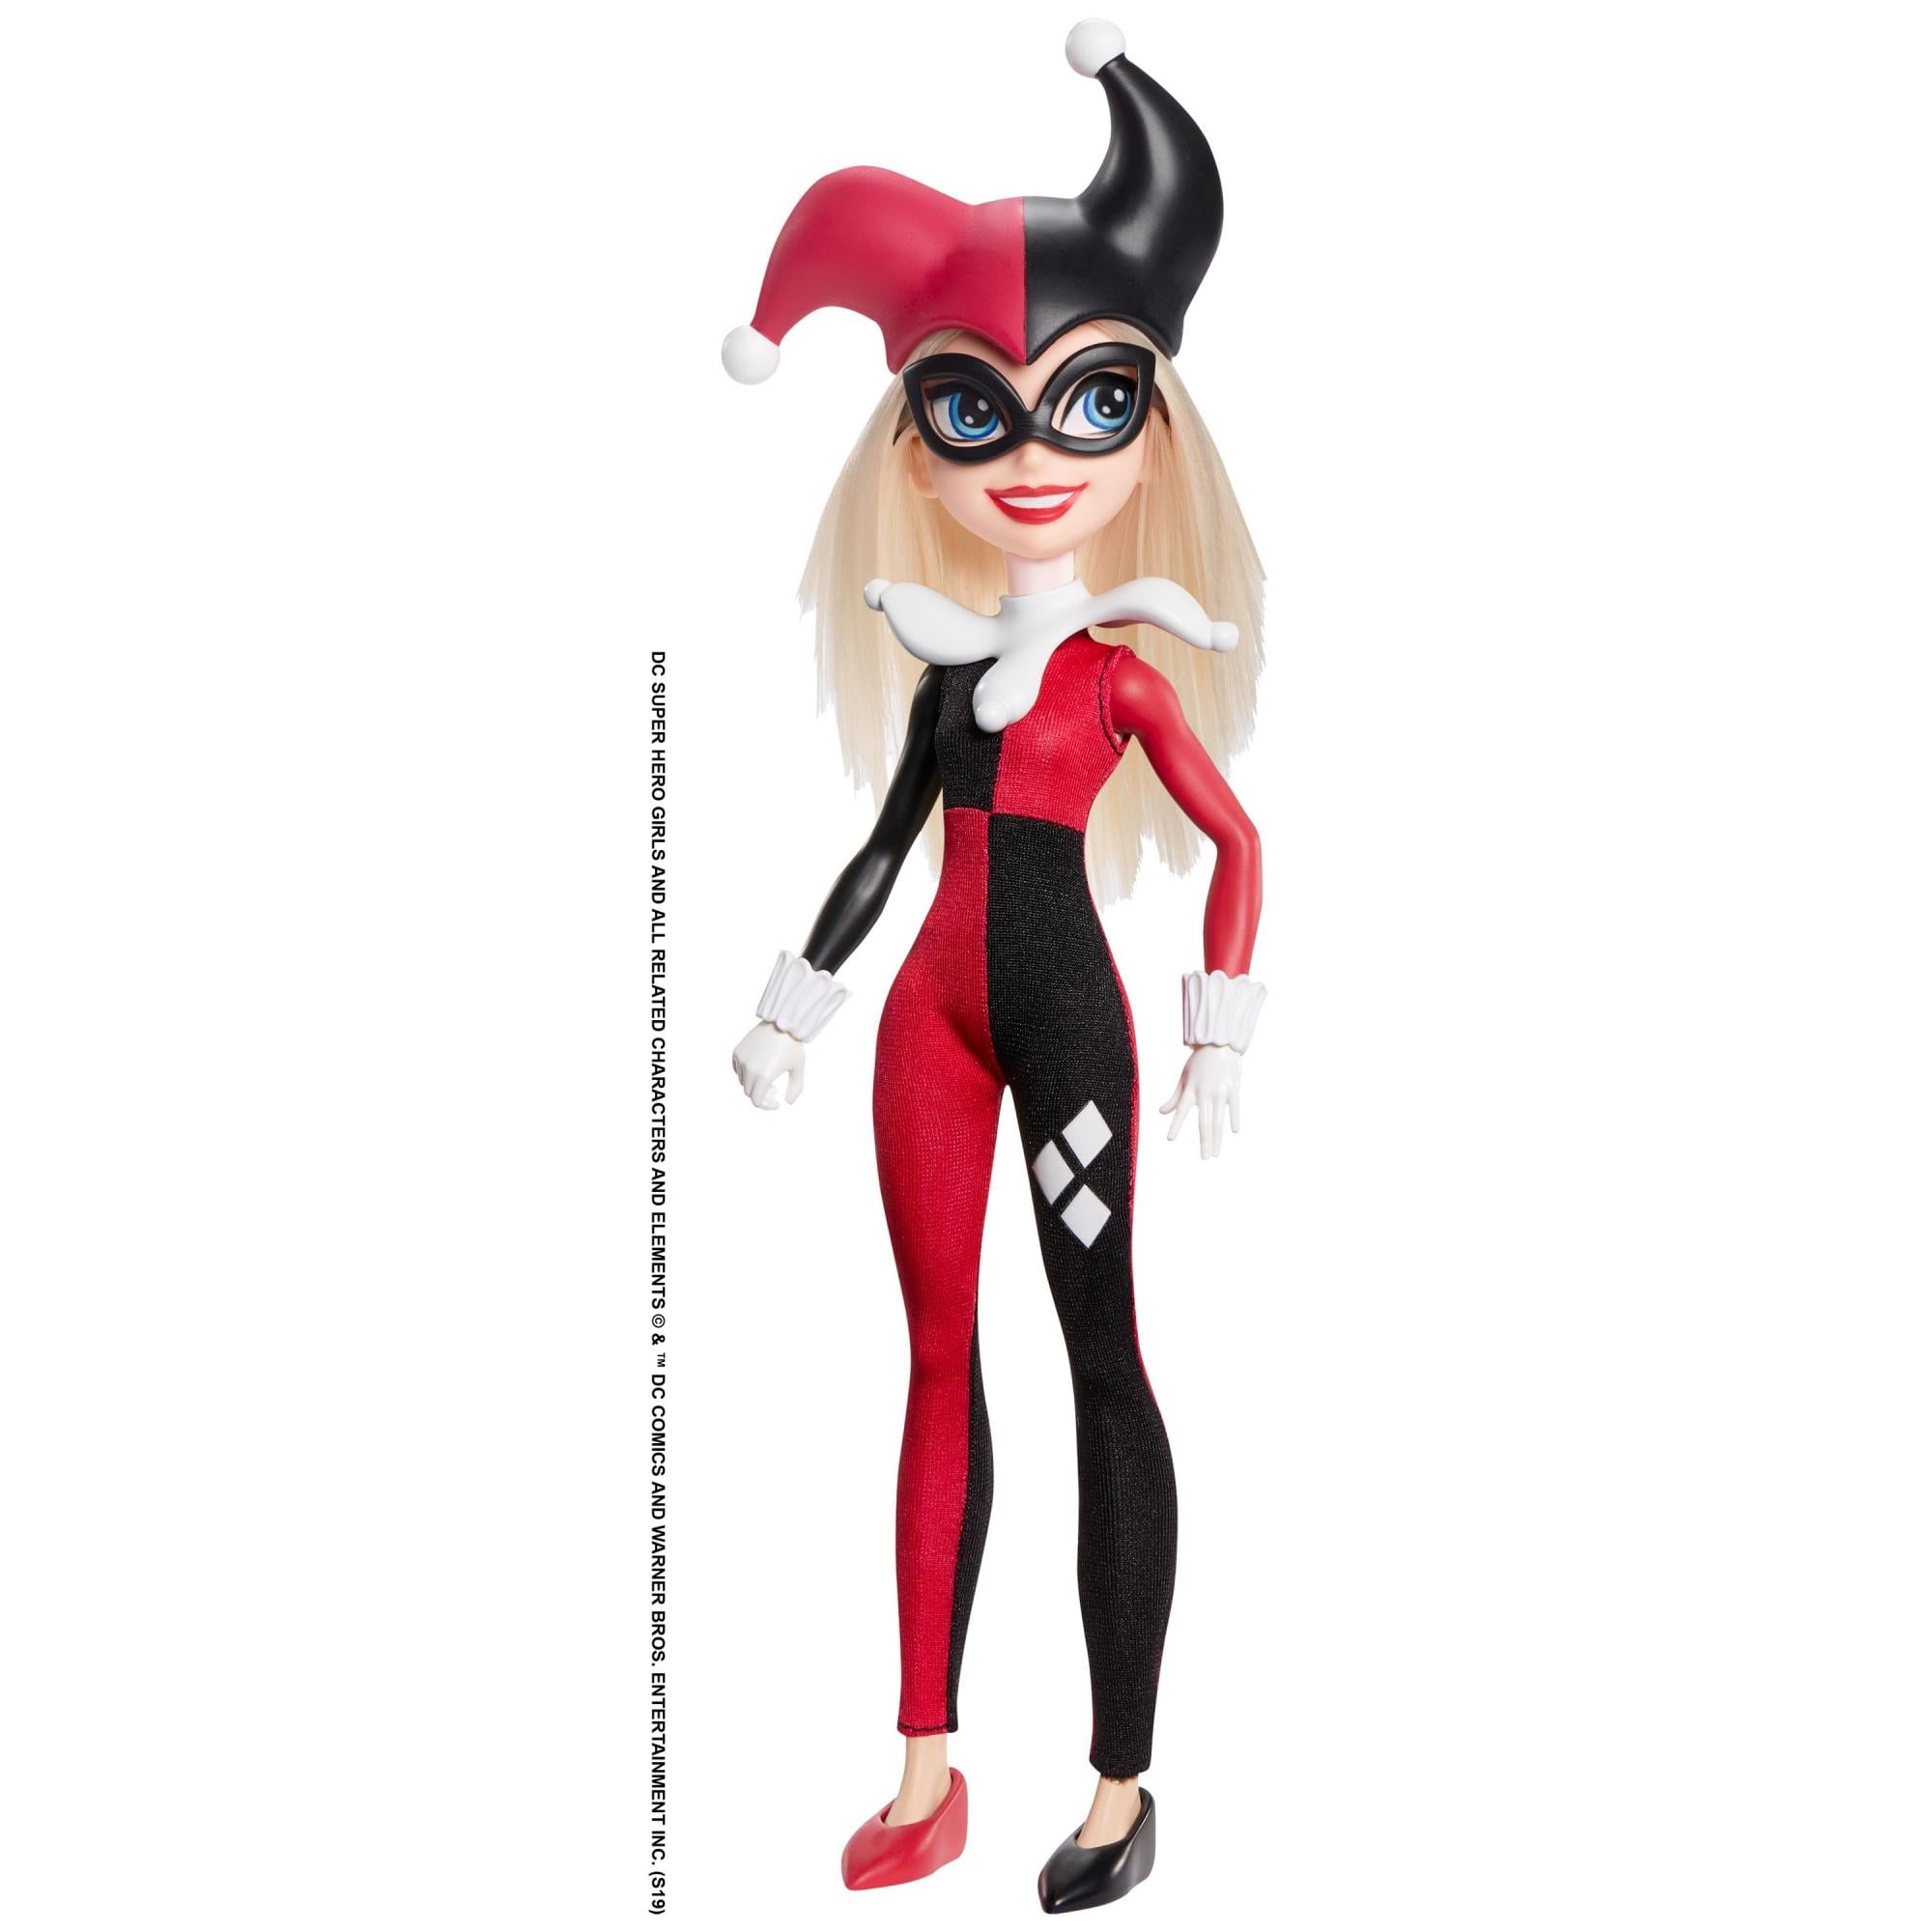 DC Super Hero Girls HARLEY QUINN 11.5” Figure Doll Cartoon Network Mattel Sealed 